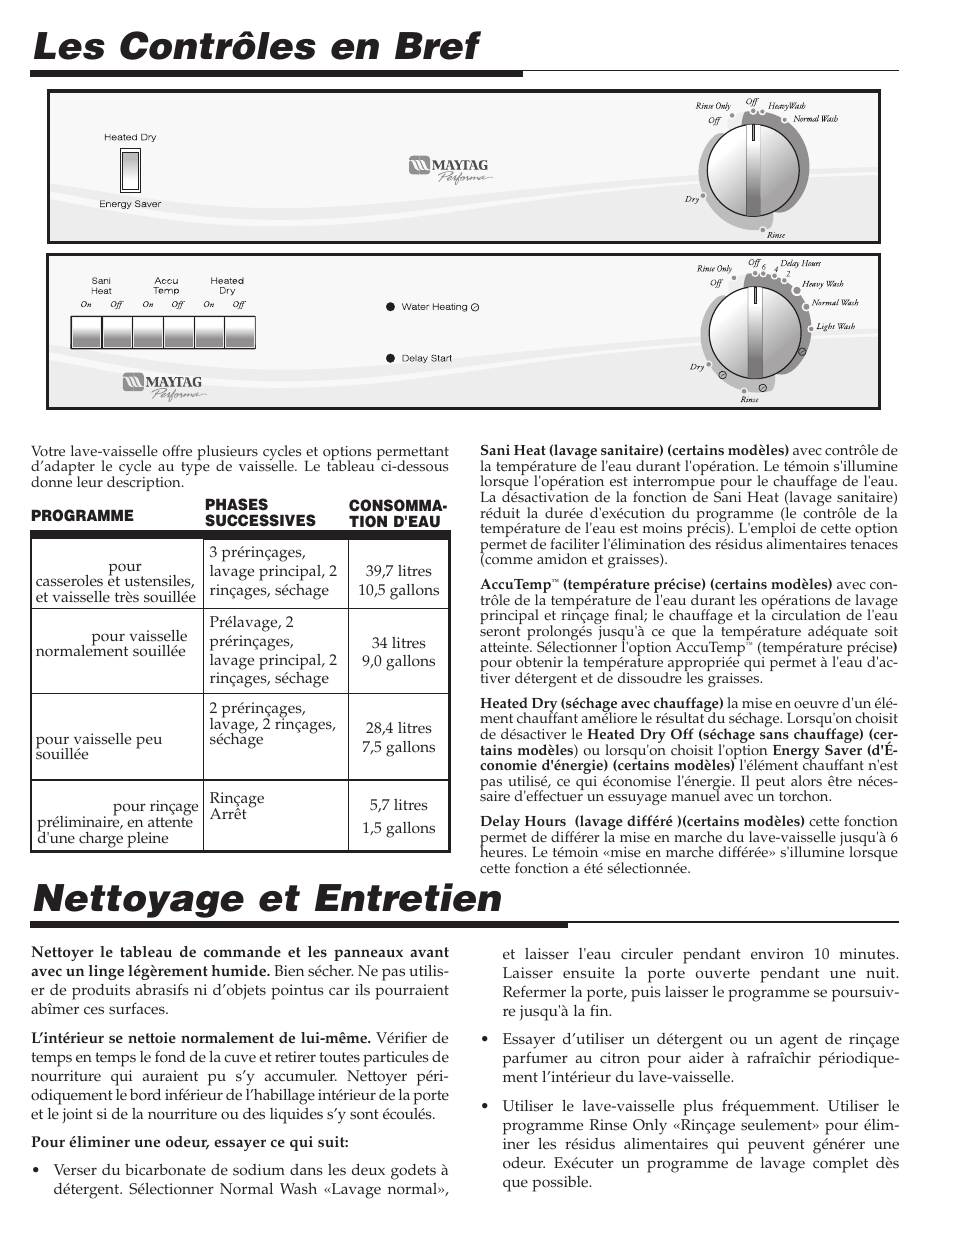 Les contrôles en bref, Nettoyage et entretien | Maytag PDB1100AWE User Manual | Page 14 / 28